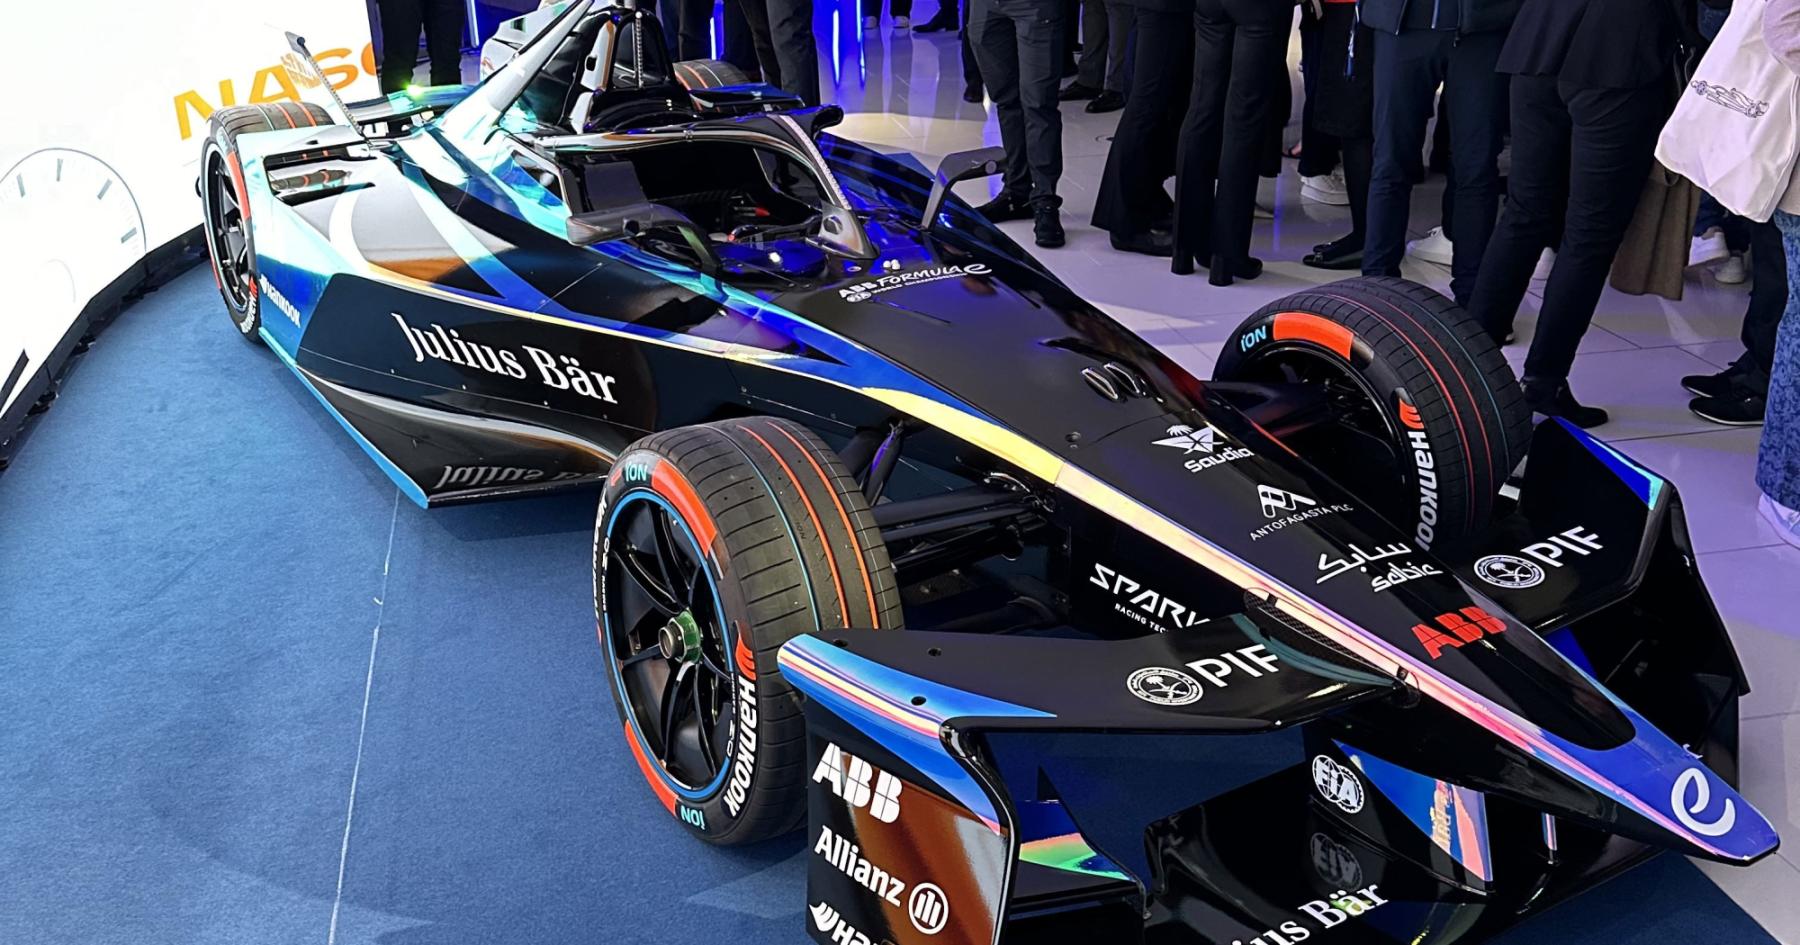 Revolutionary Advances in Electric Racing: Formula E's Record-Breaking New Era and Jaguar's Gen4 Commitment